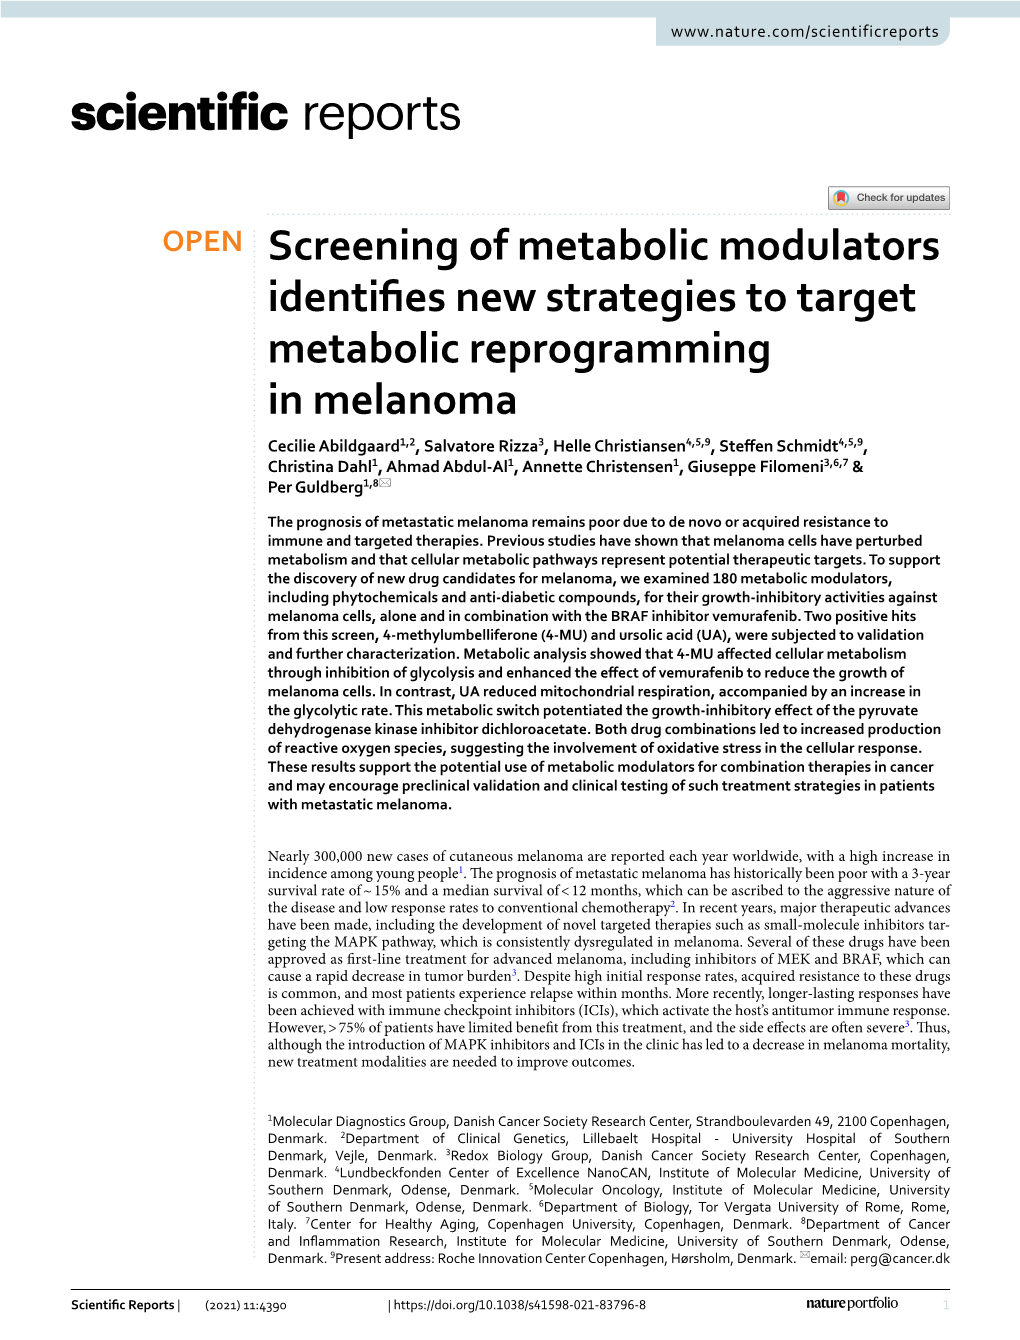 Screening of Metabolic Modulators Identifies New Strategies to Target